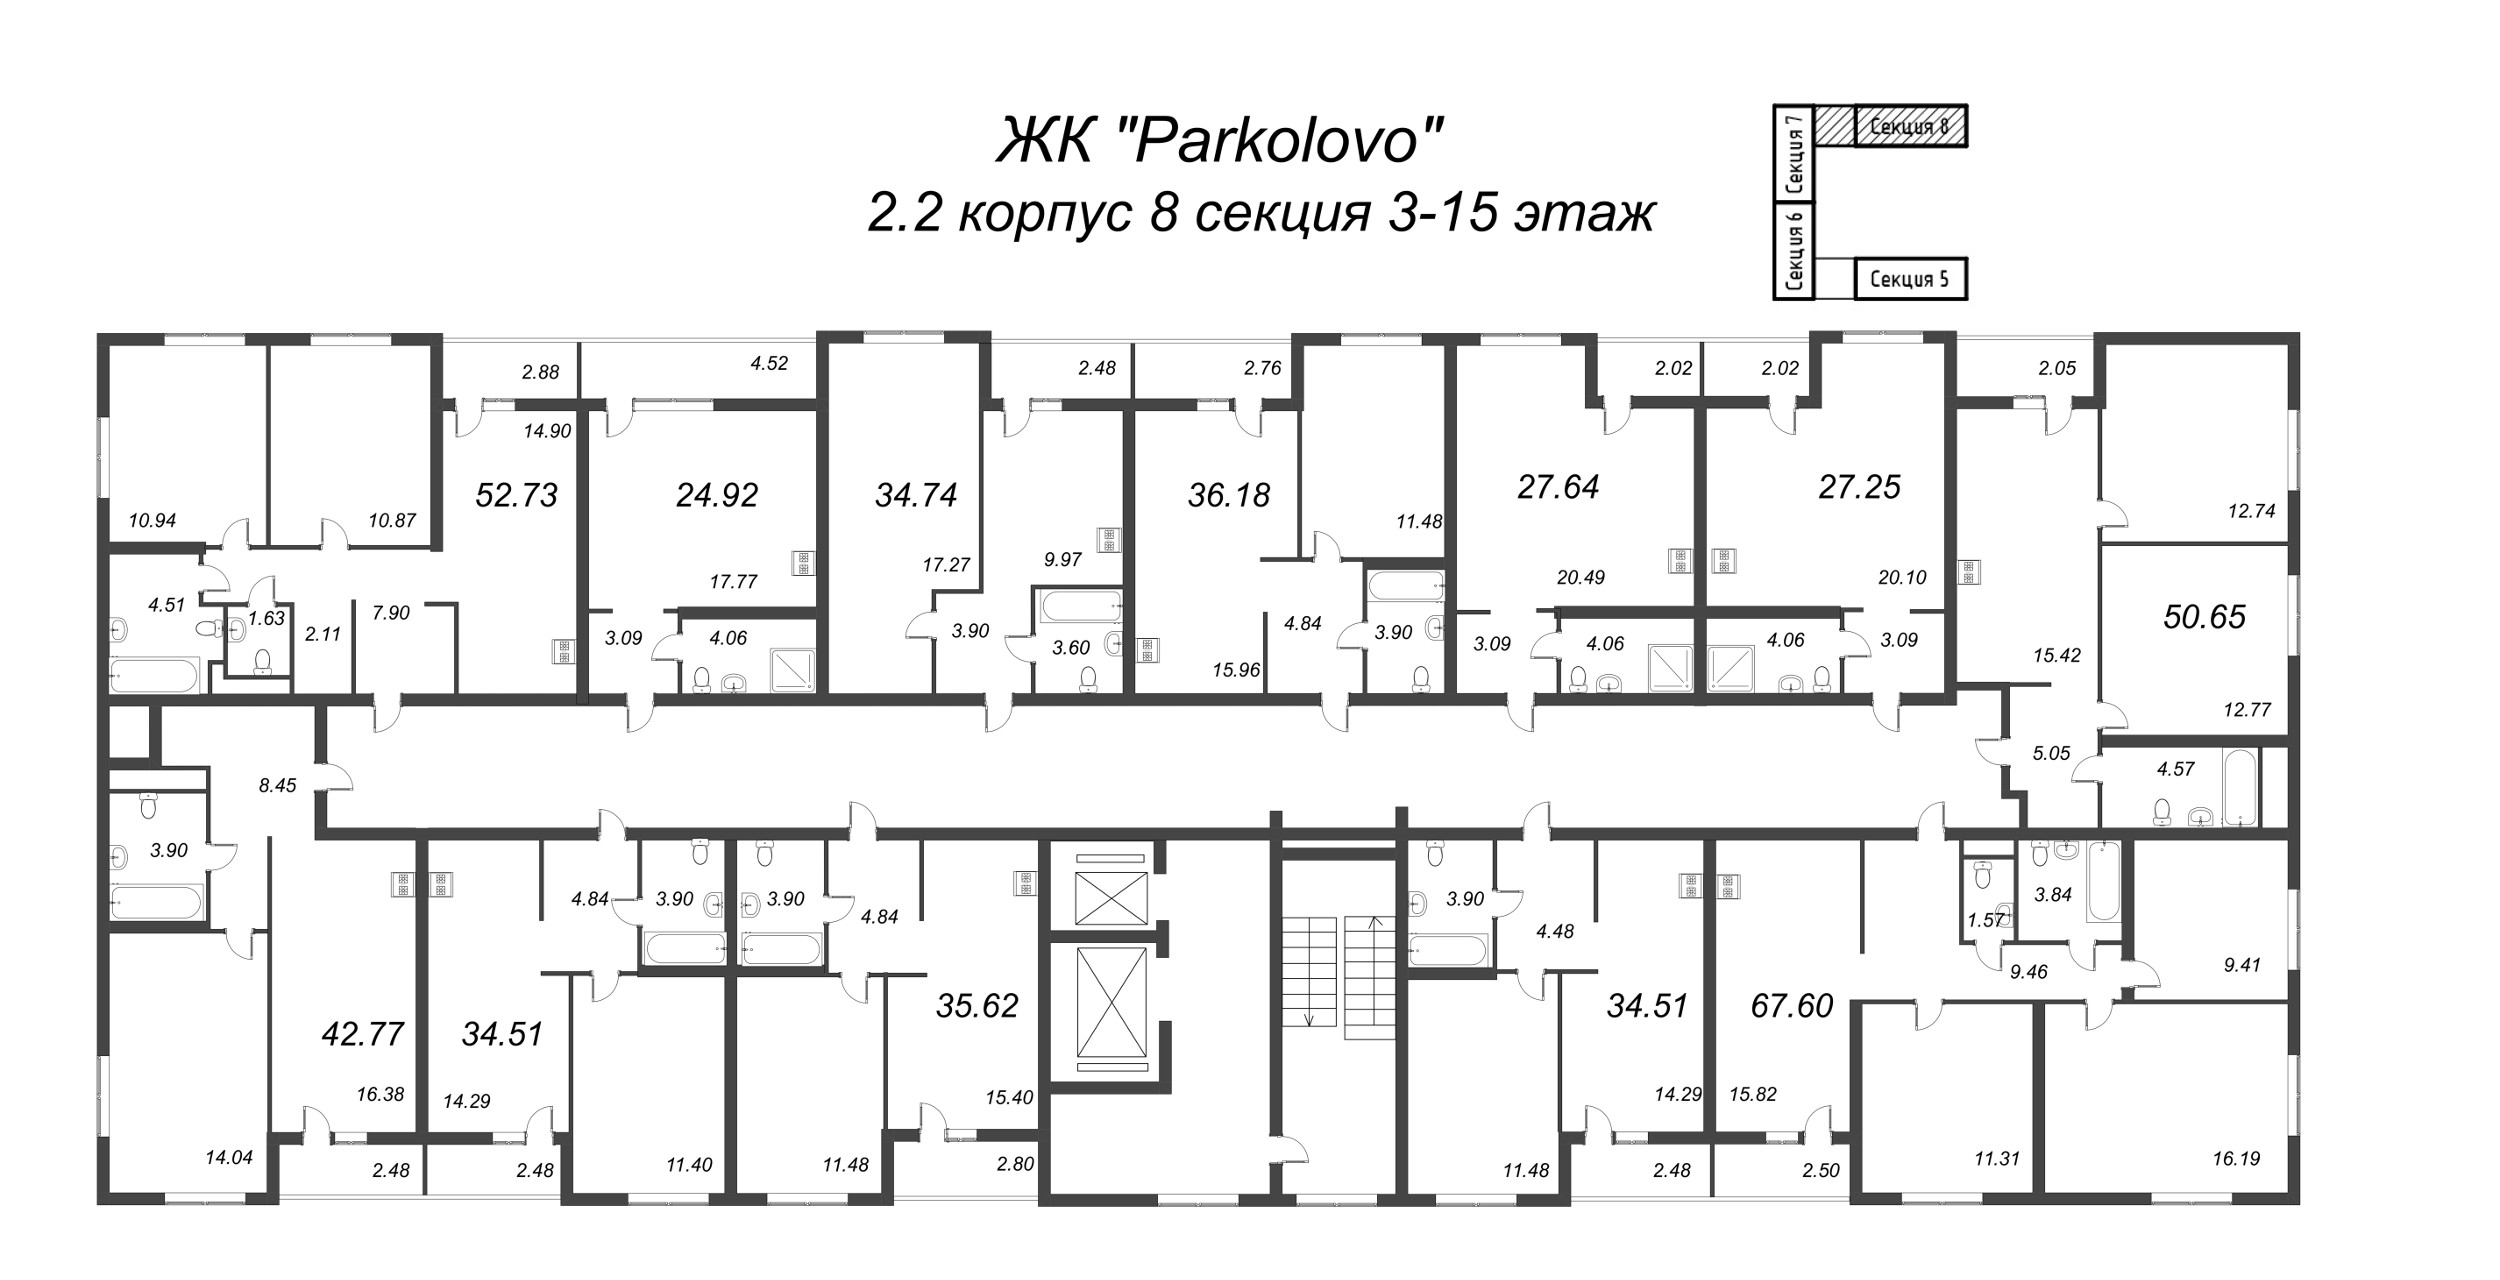 3-комнатная (Евро) квартира, 50.65 м² - планировка этажа